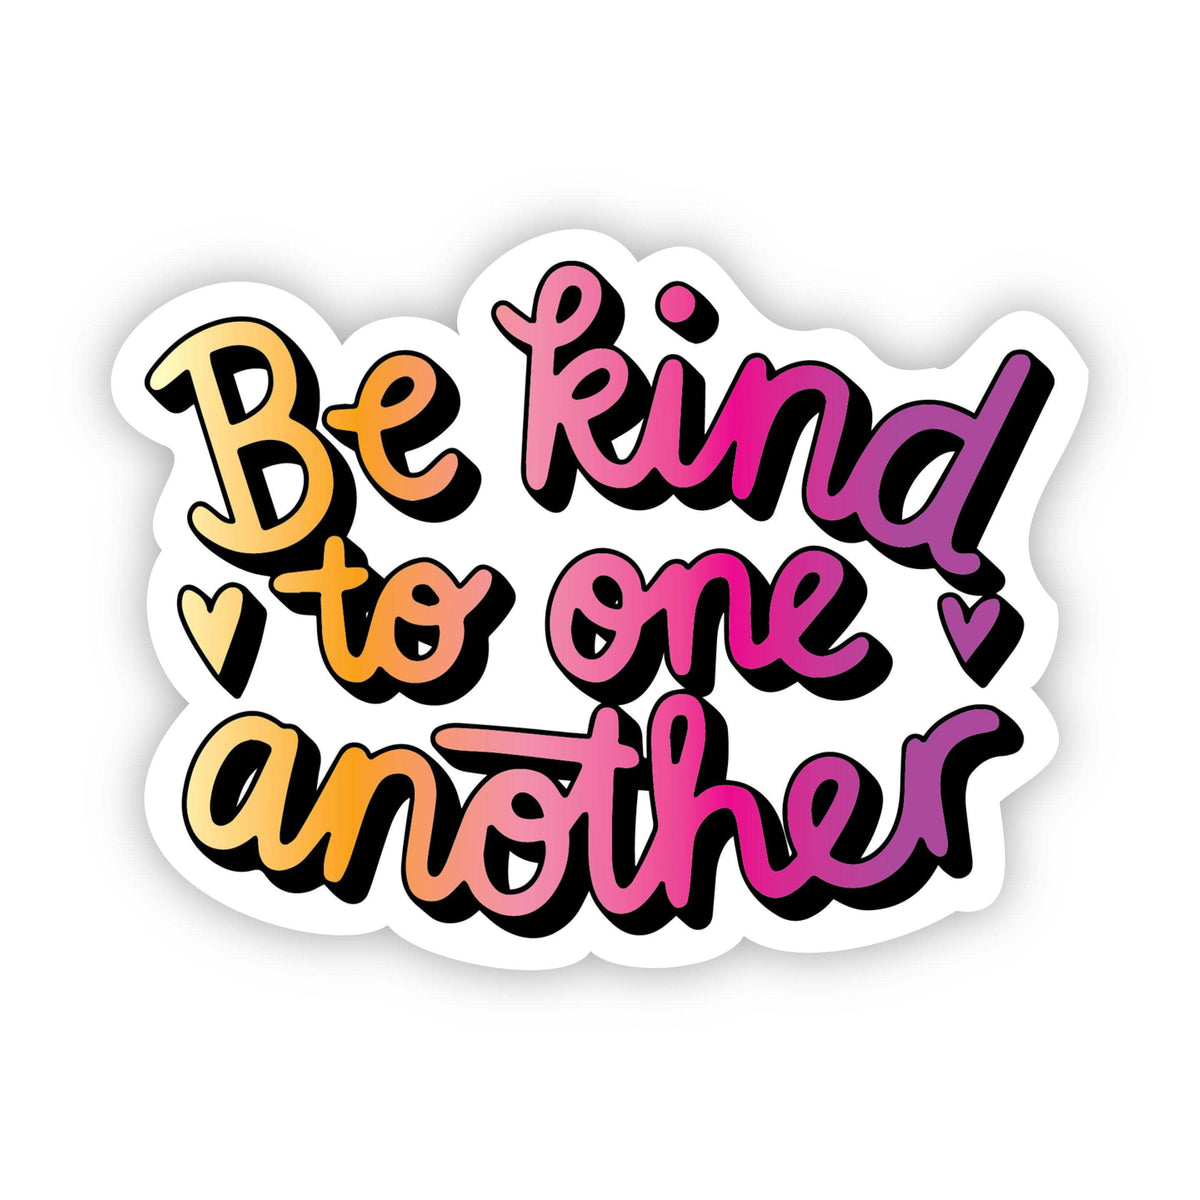 Spread Kindness Cute Sticker – Big Moods